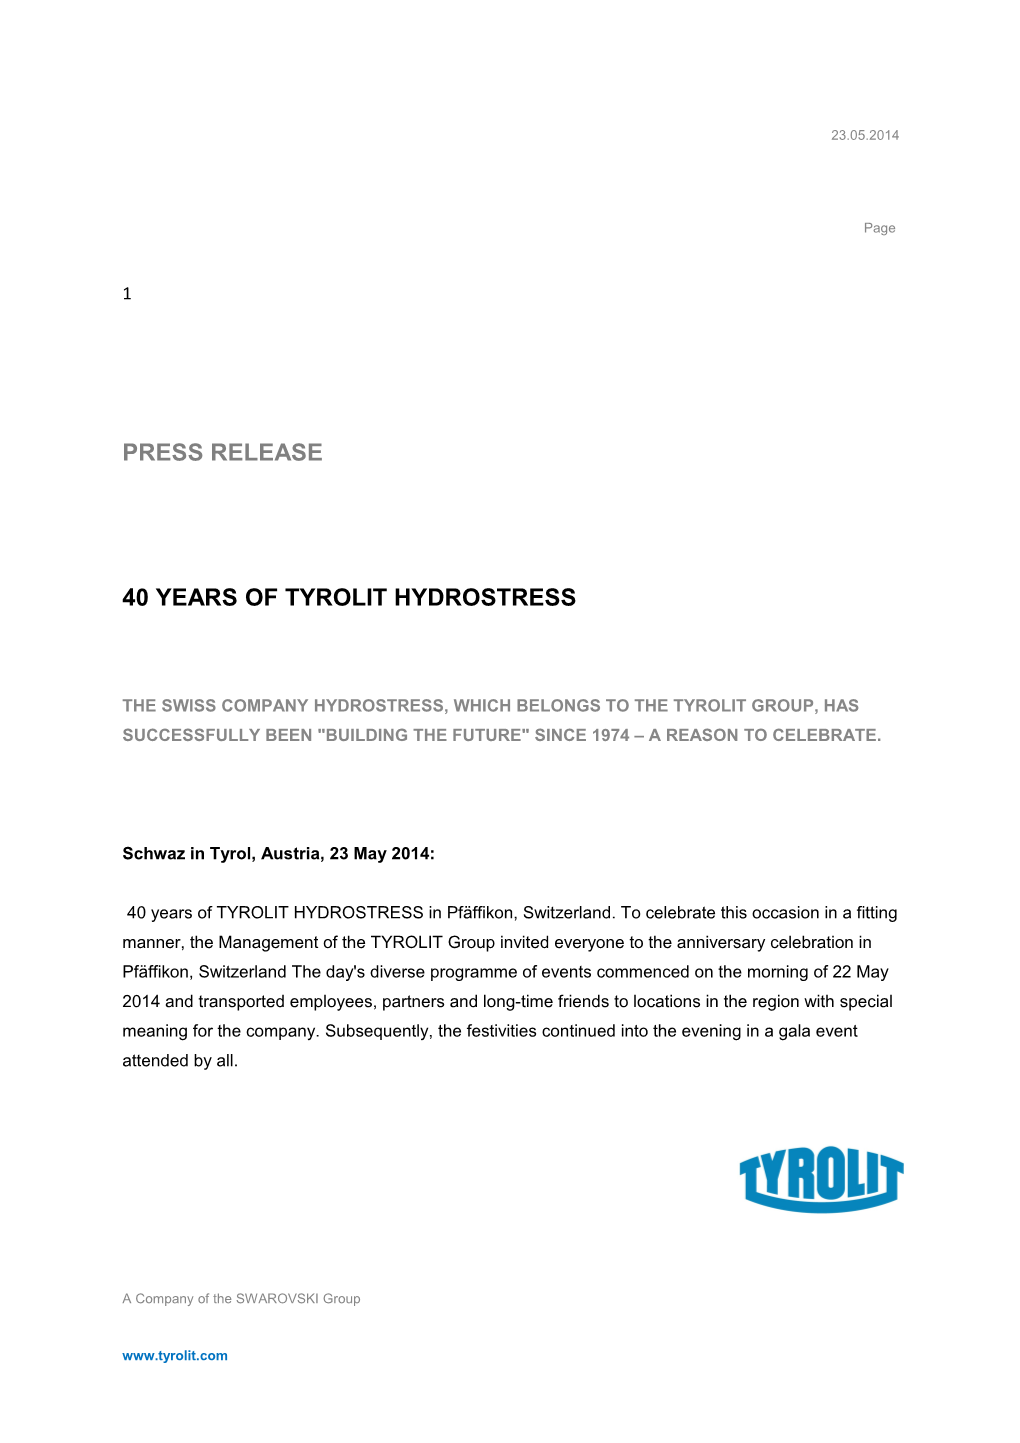 40 Years of Tyrolit Hydrostress